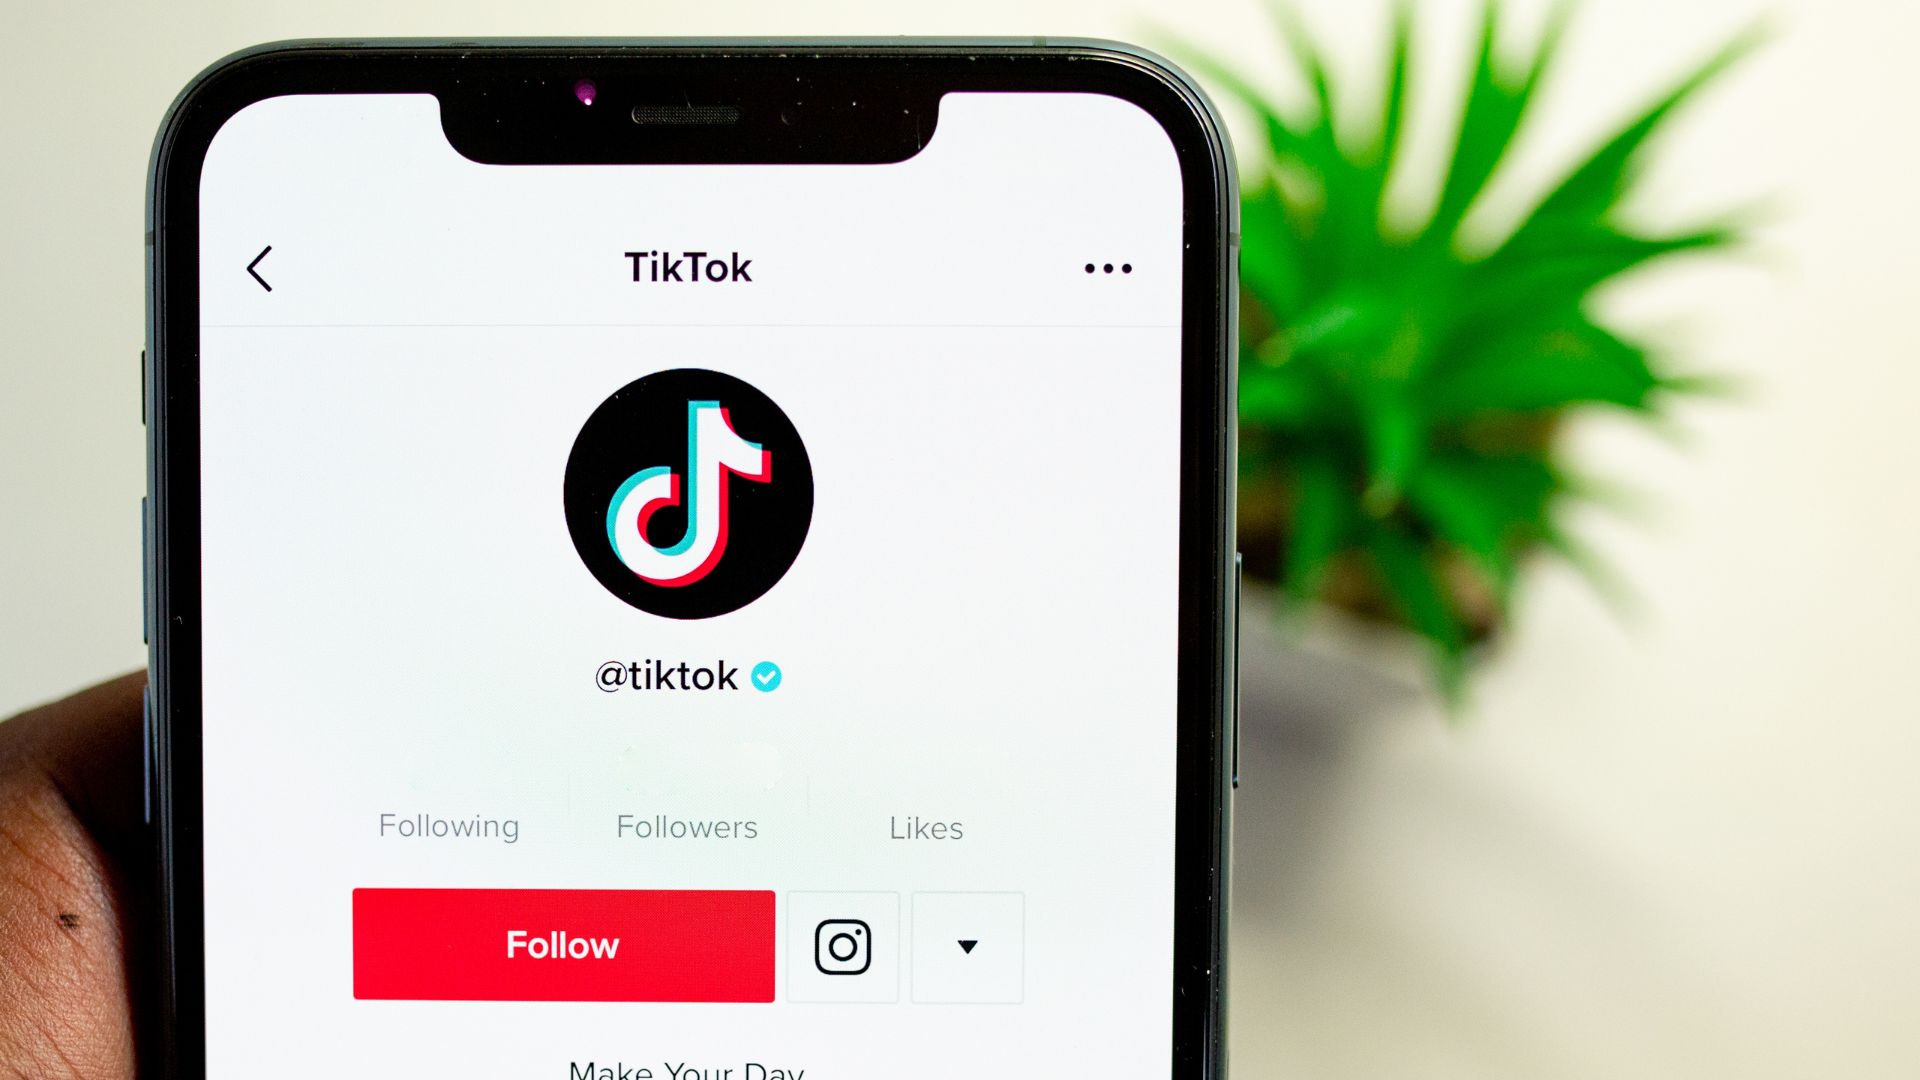 Microsoft Teams app consolidates remixed ringtone from TikTok